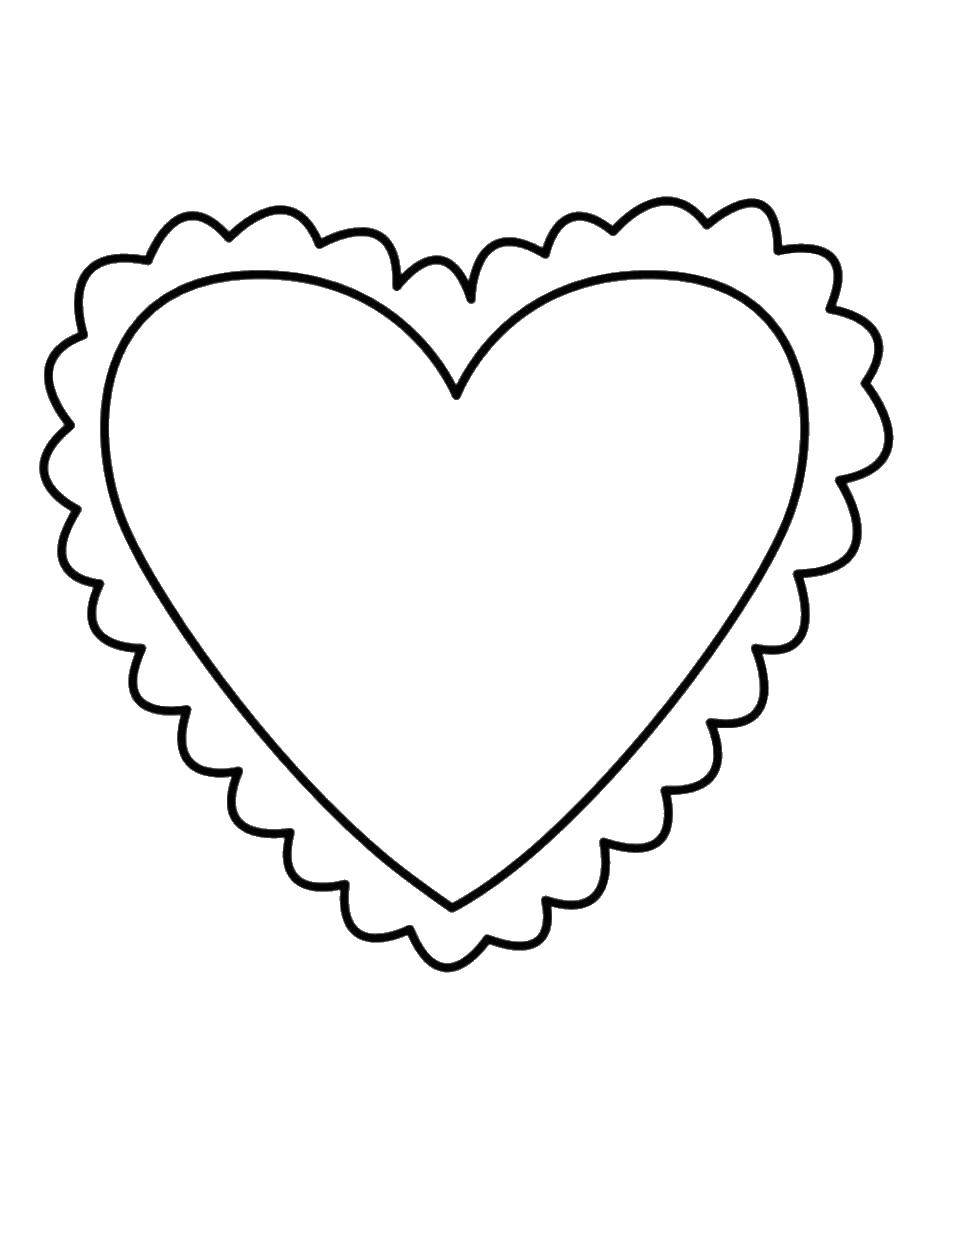 Coloring Heart. Category Hearts. Tags:  heart shape.